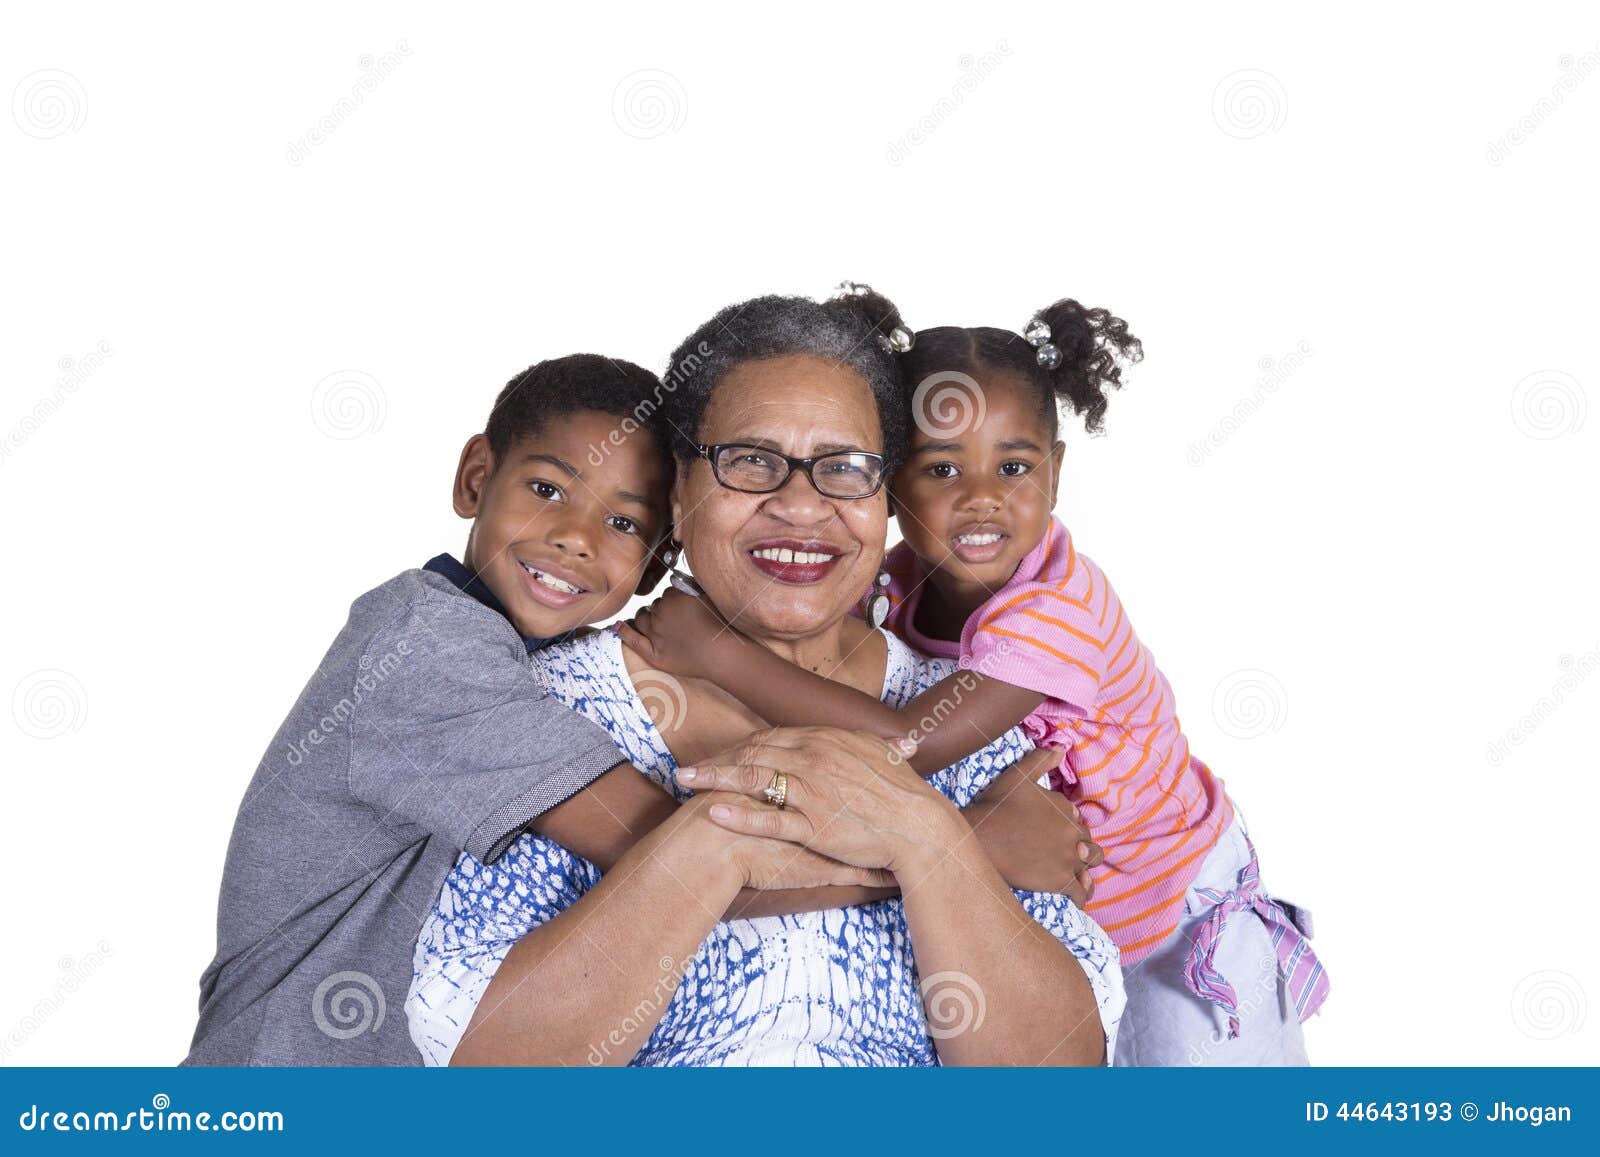 a grandmother and her grandchildren